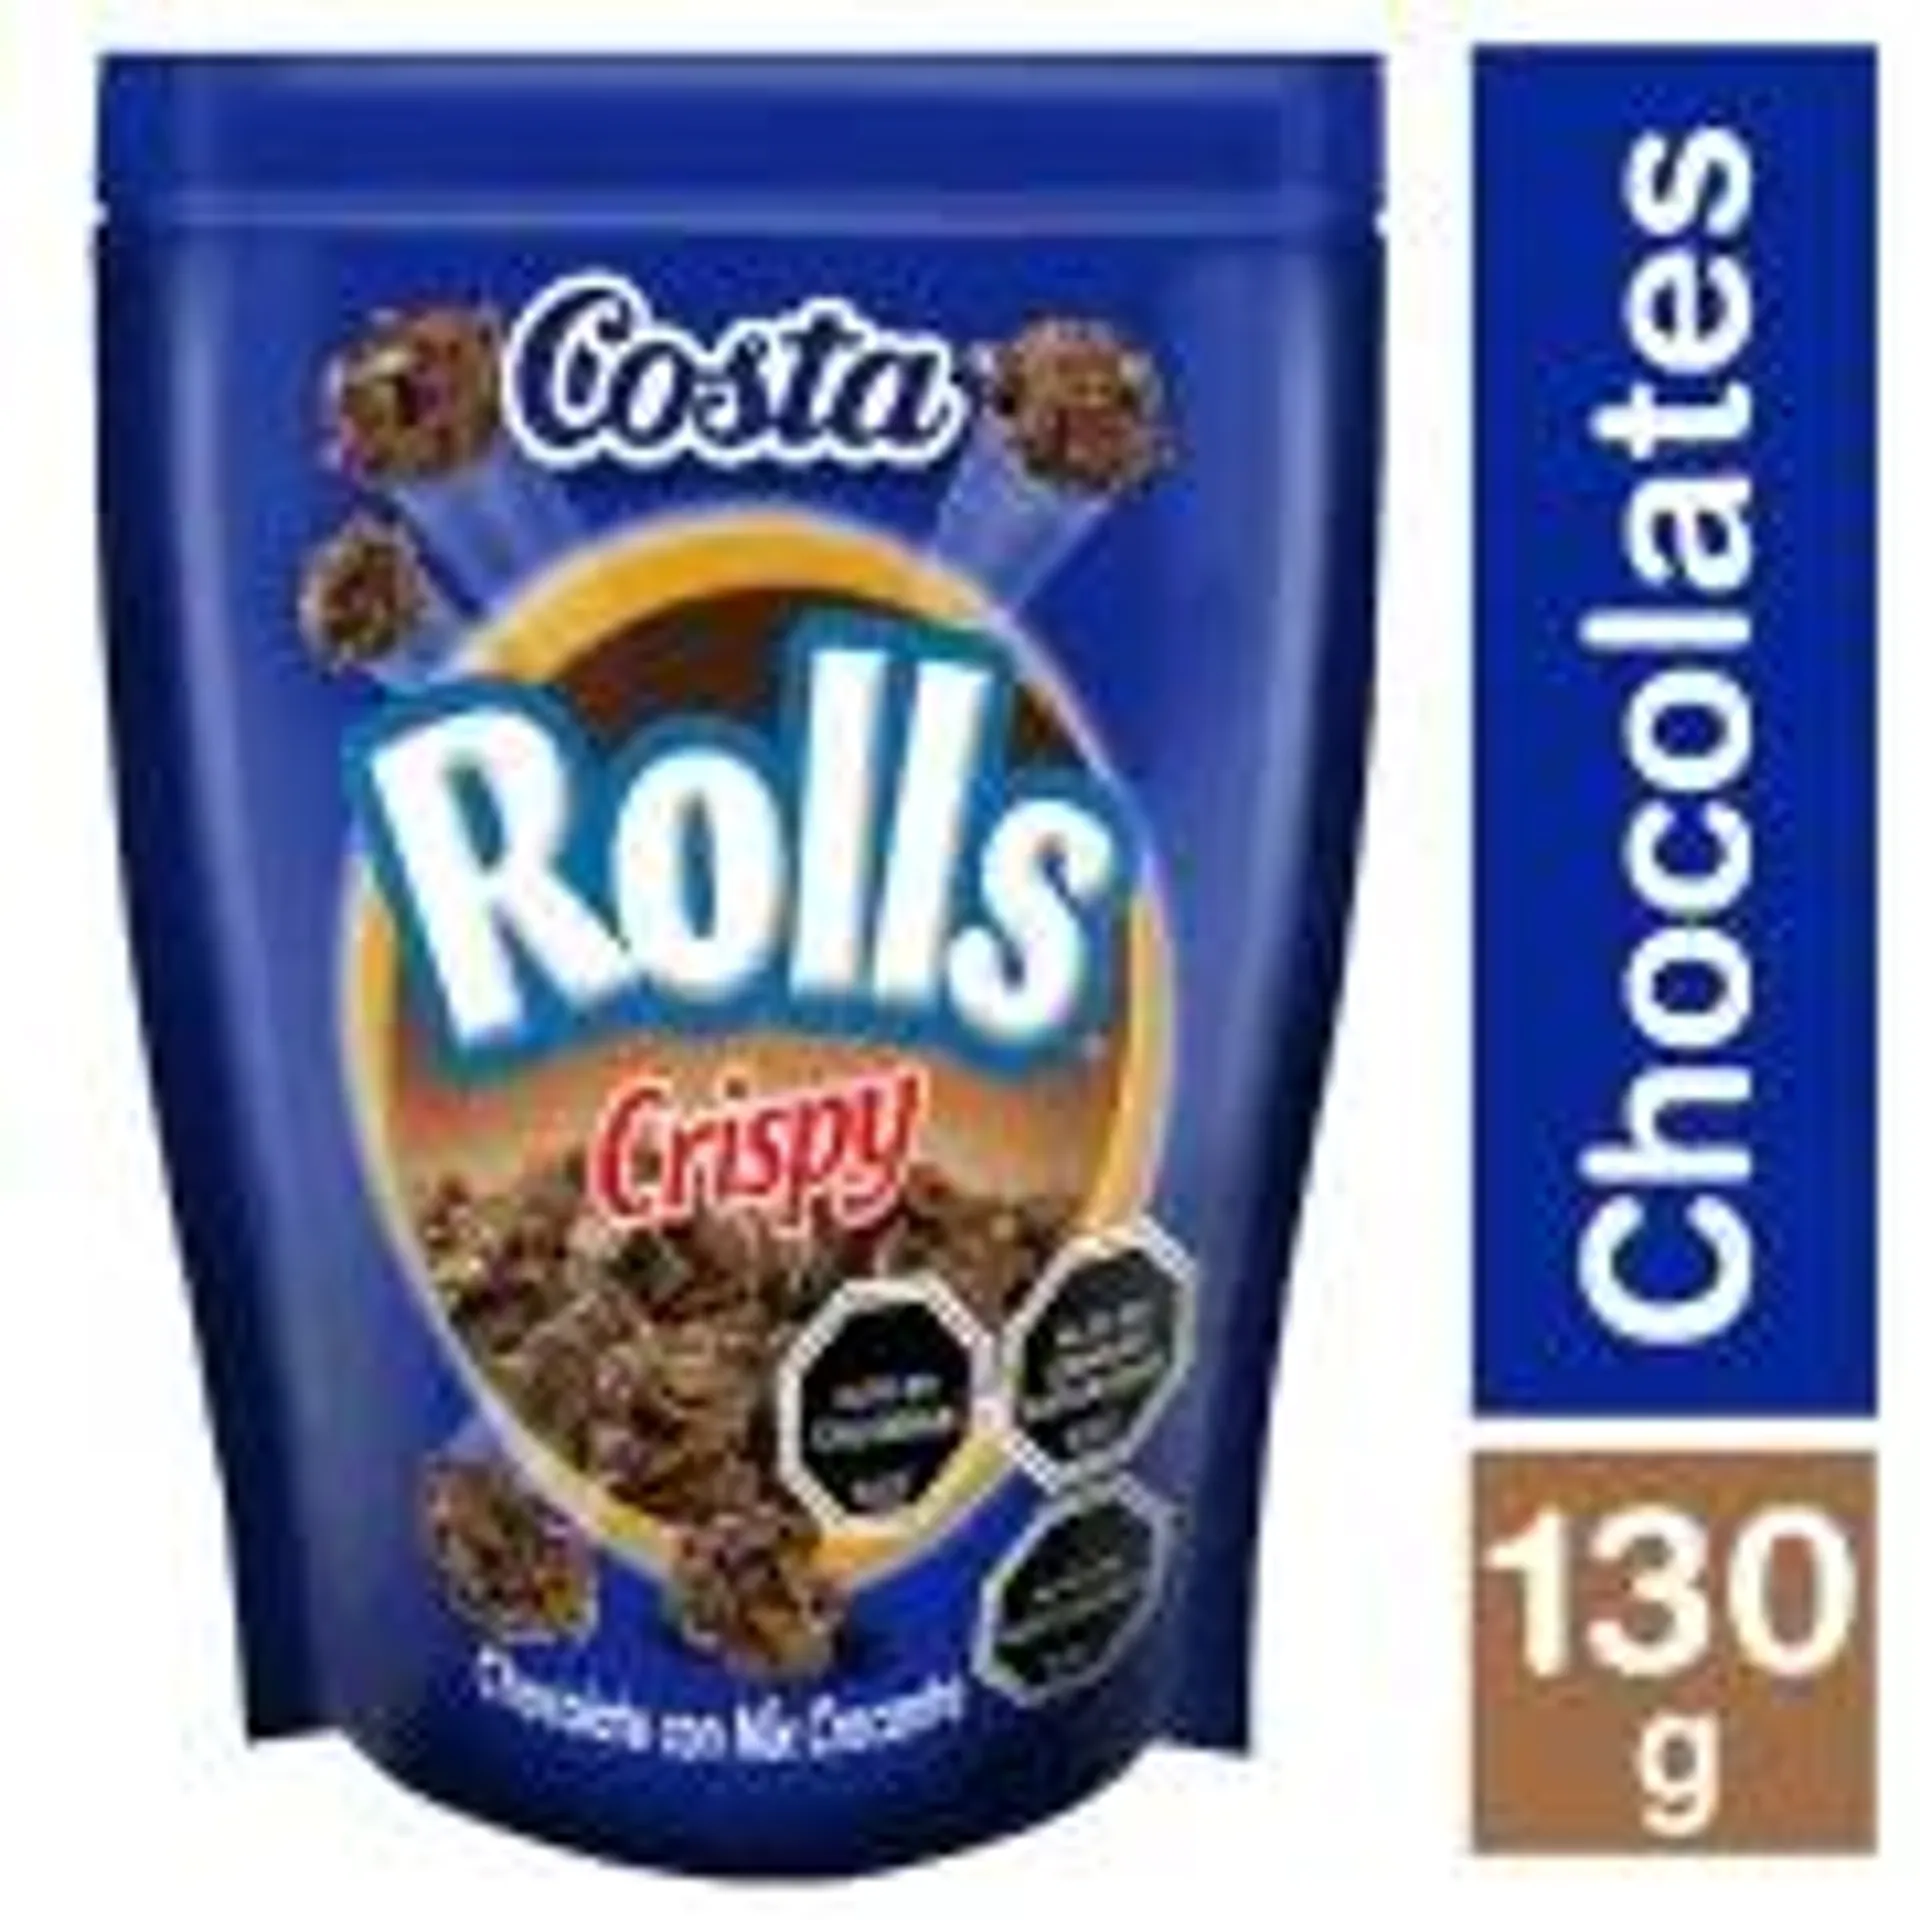 Chocolate Rolls Crispy, 130 g